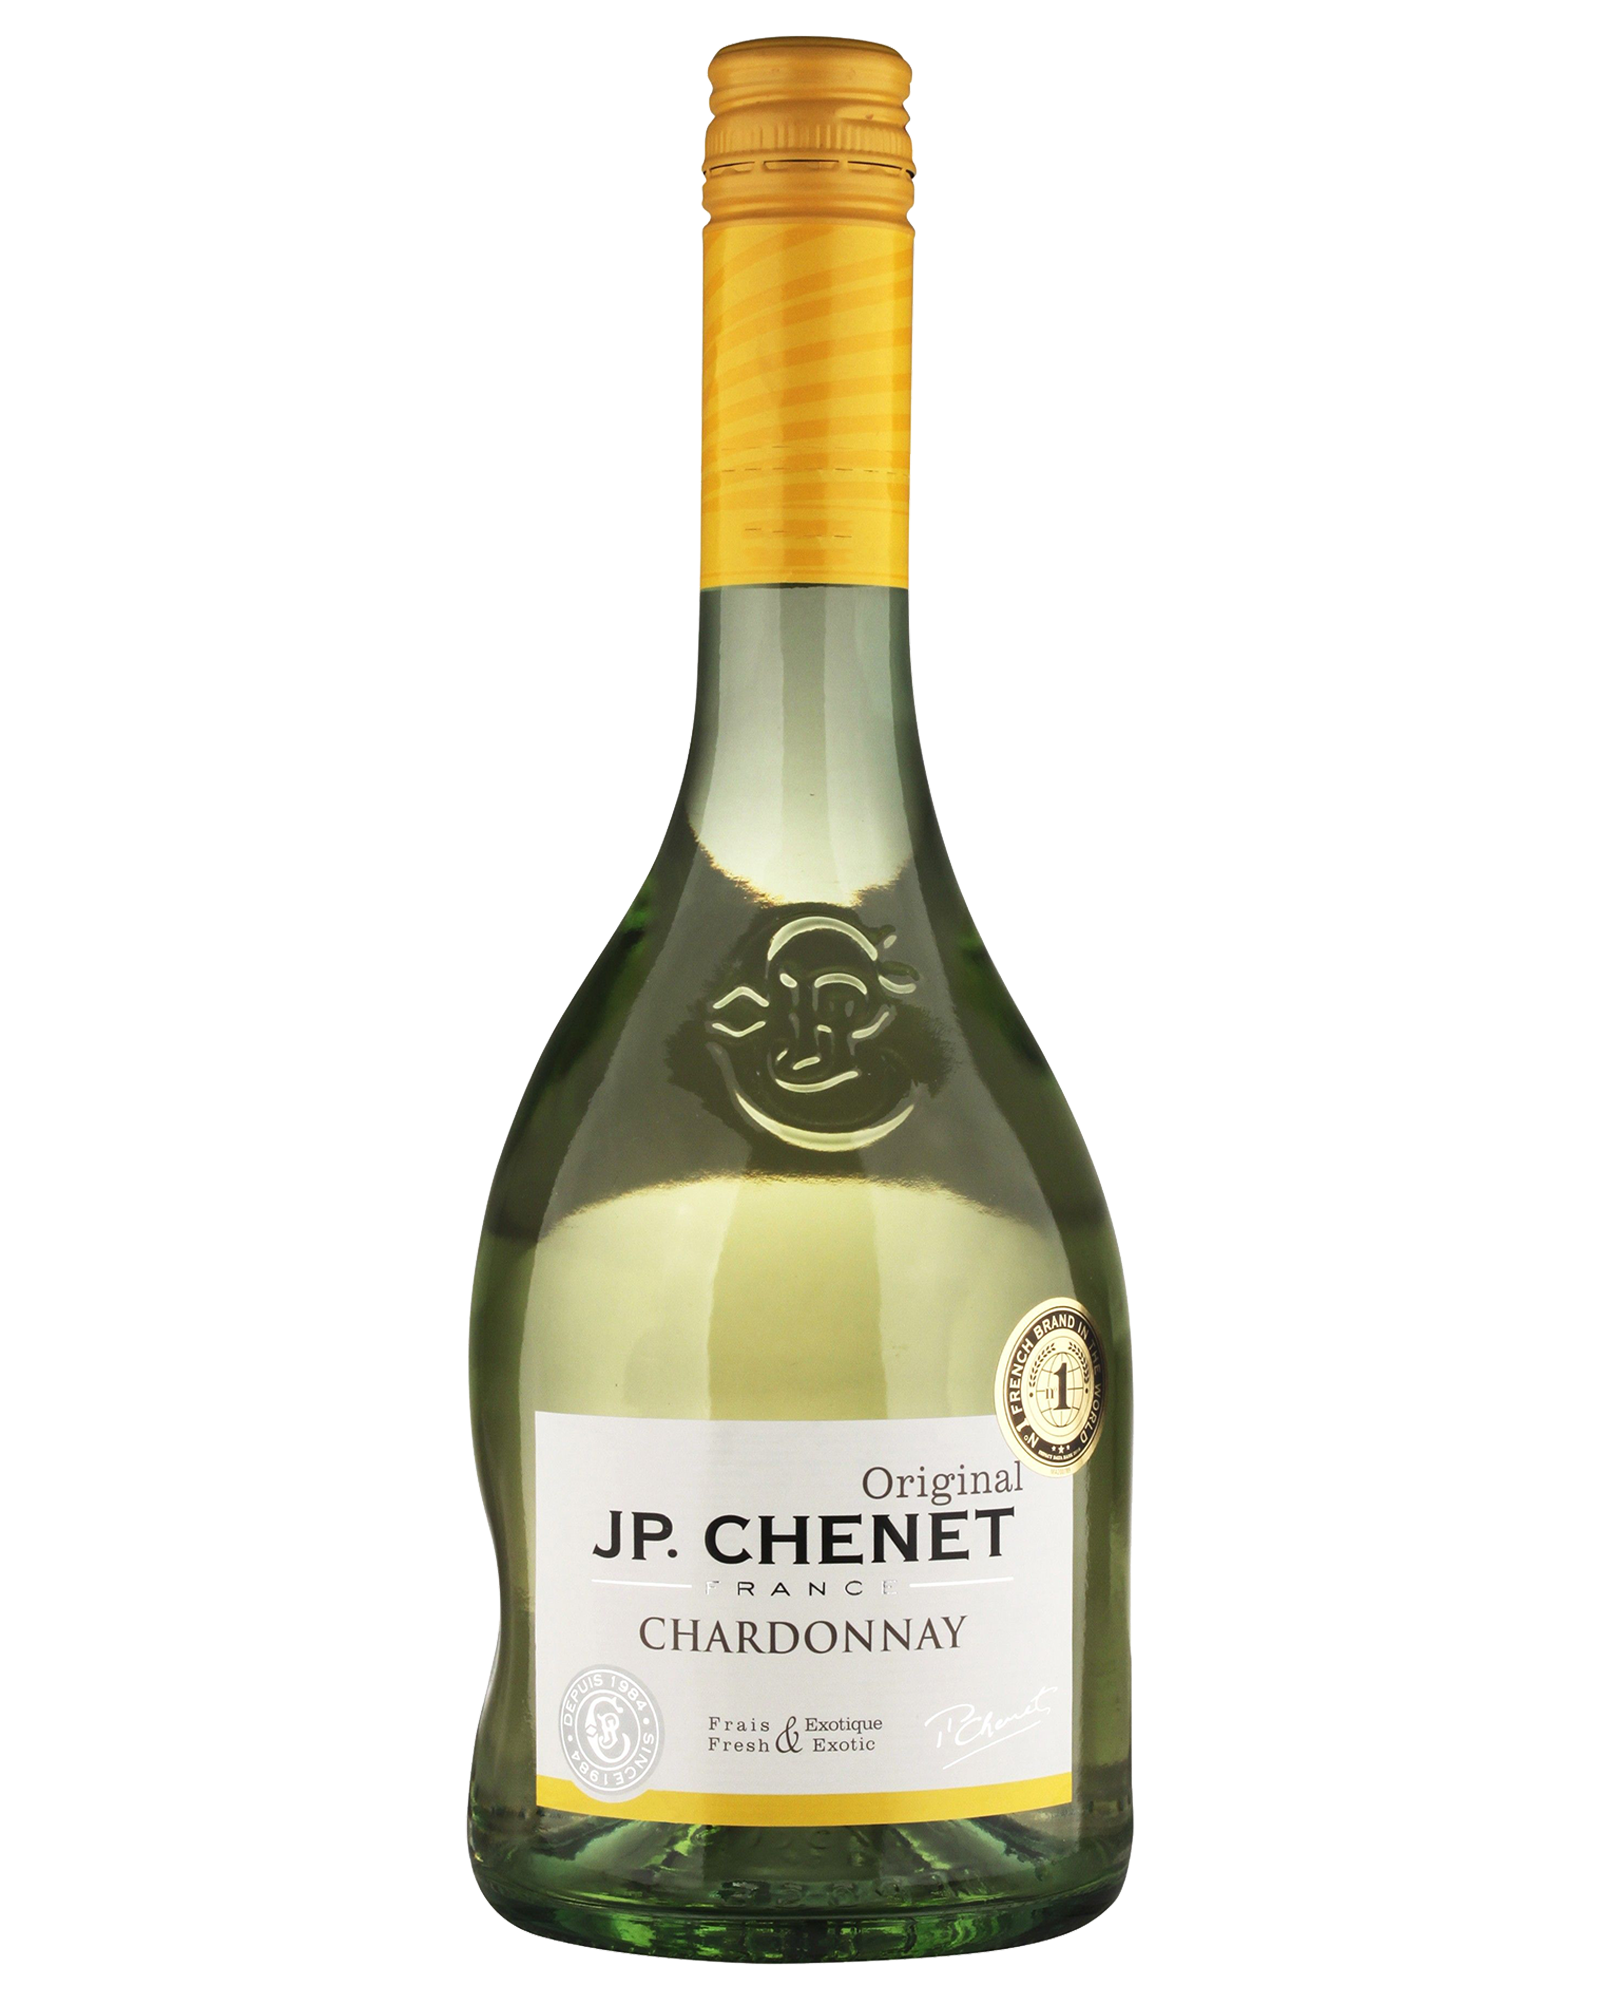 JP Chenet Chardonnay